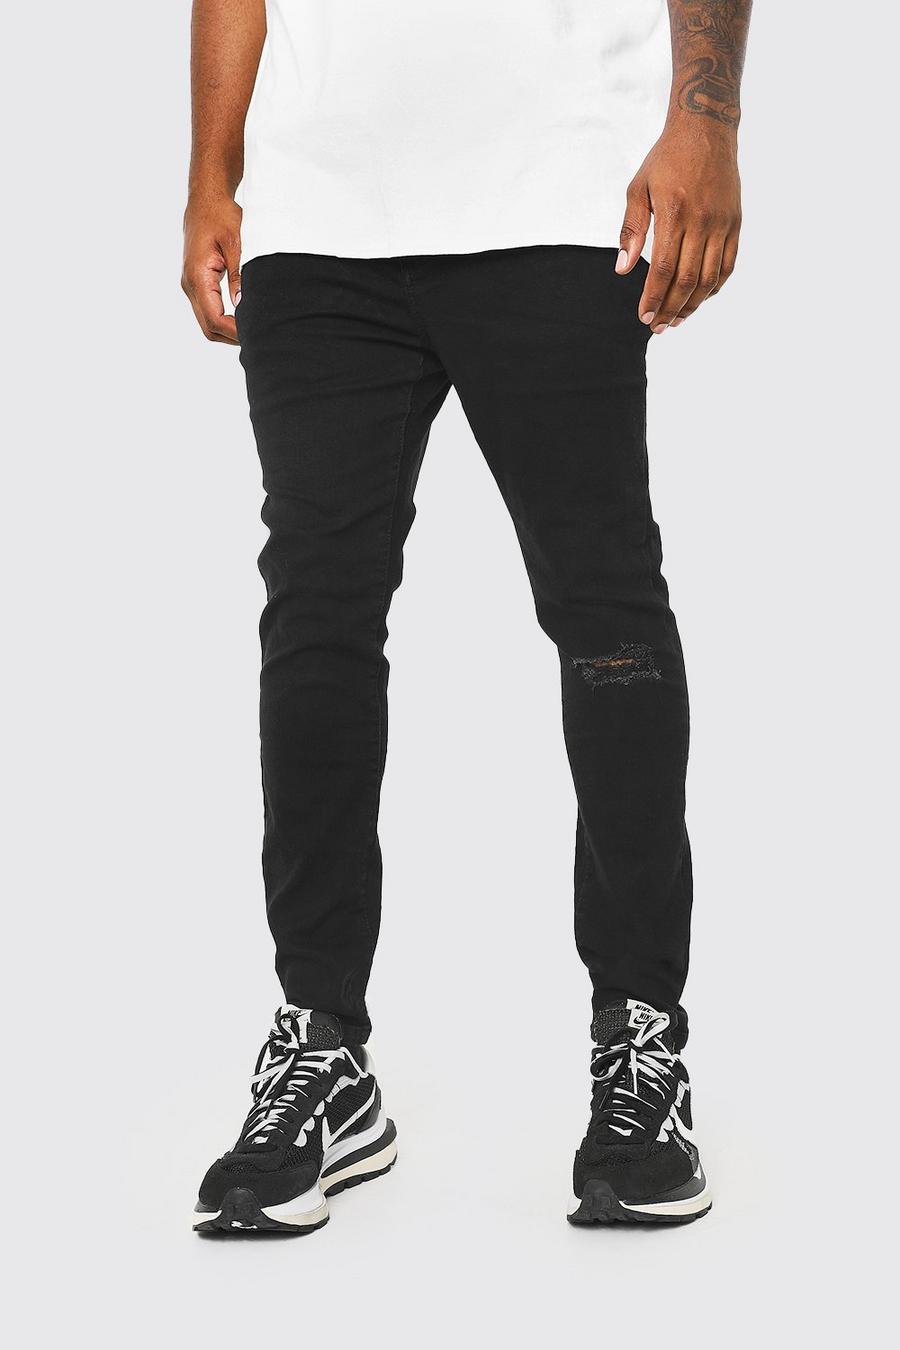 Black noir Plus Size Busted Knee Super Skinny Jean